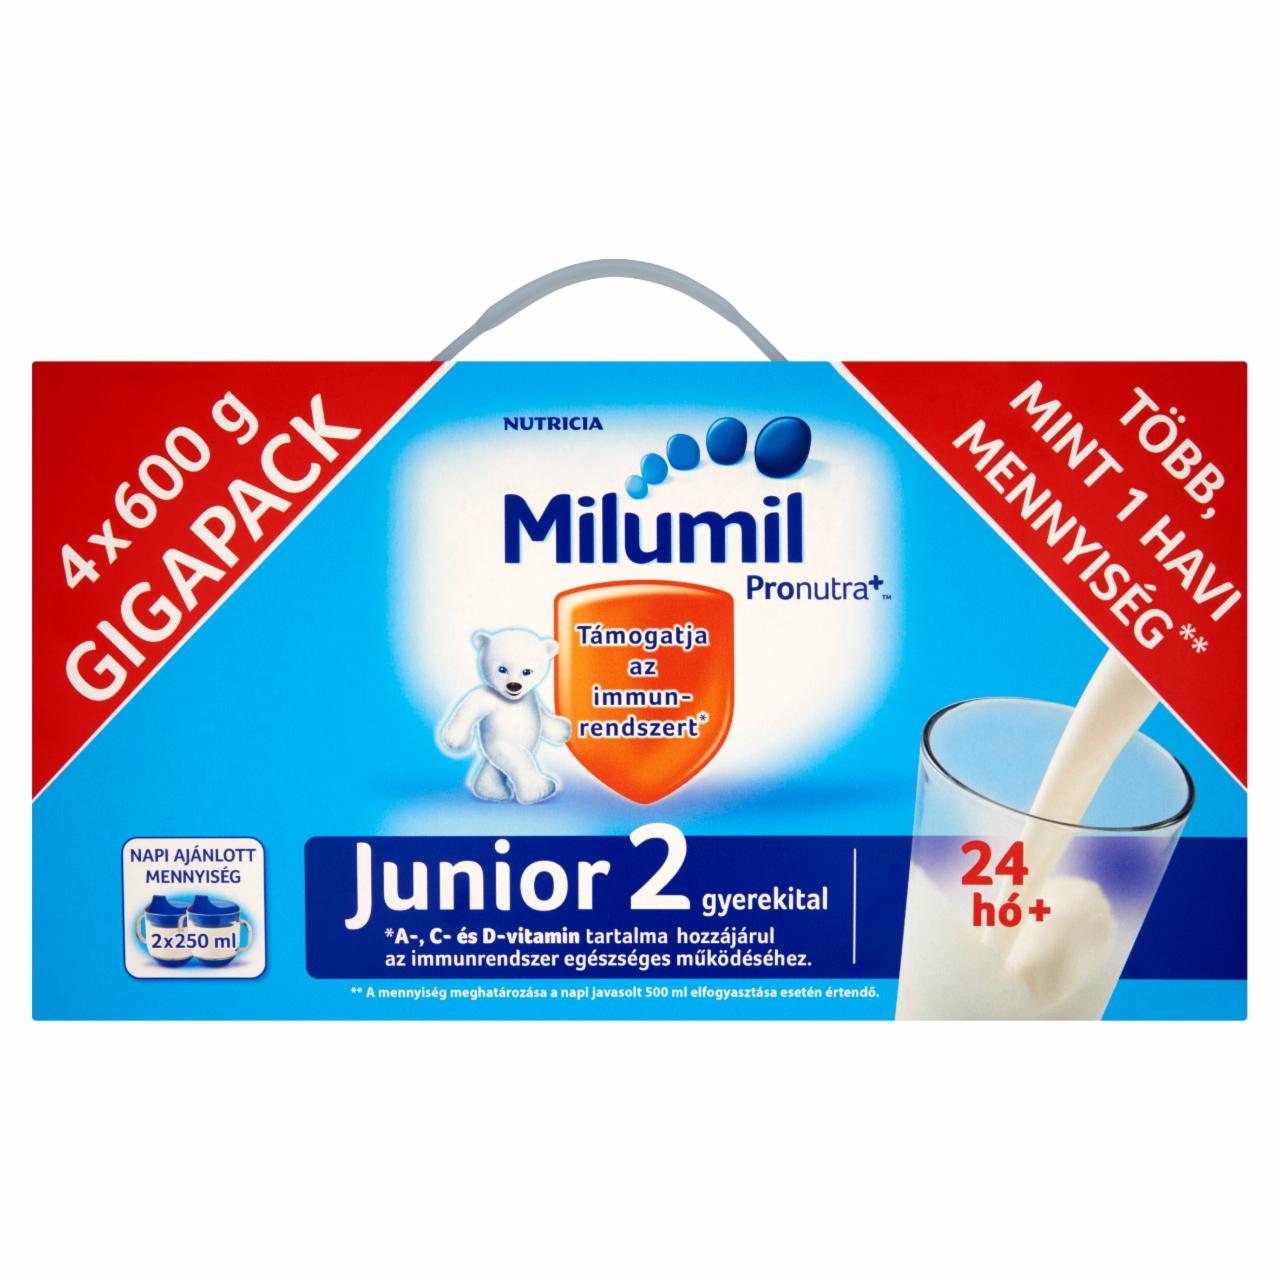 Képek - Milumil Junior 2 gyerekital 24 hó+ 4 x 600 g